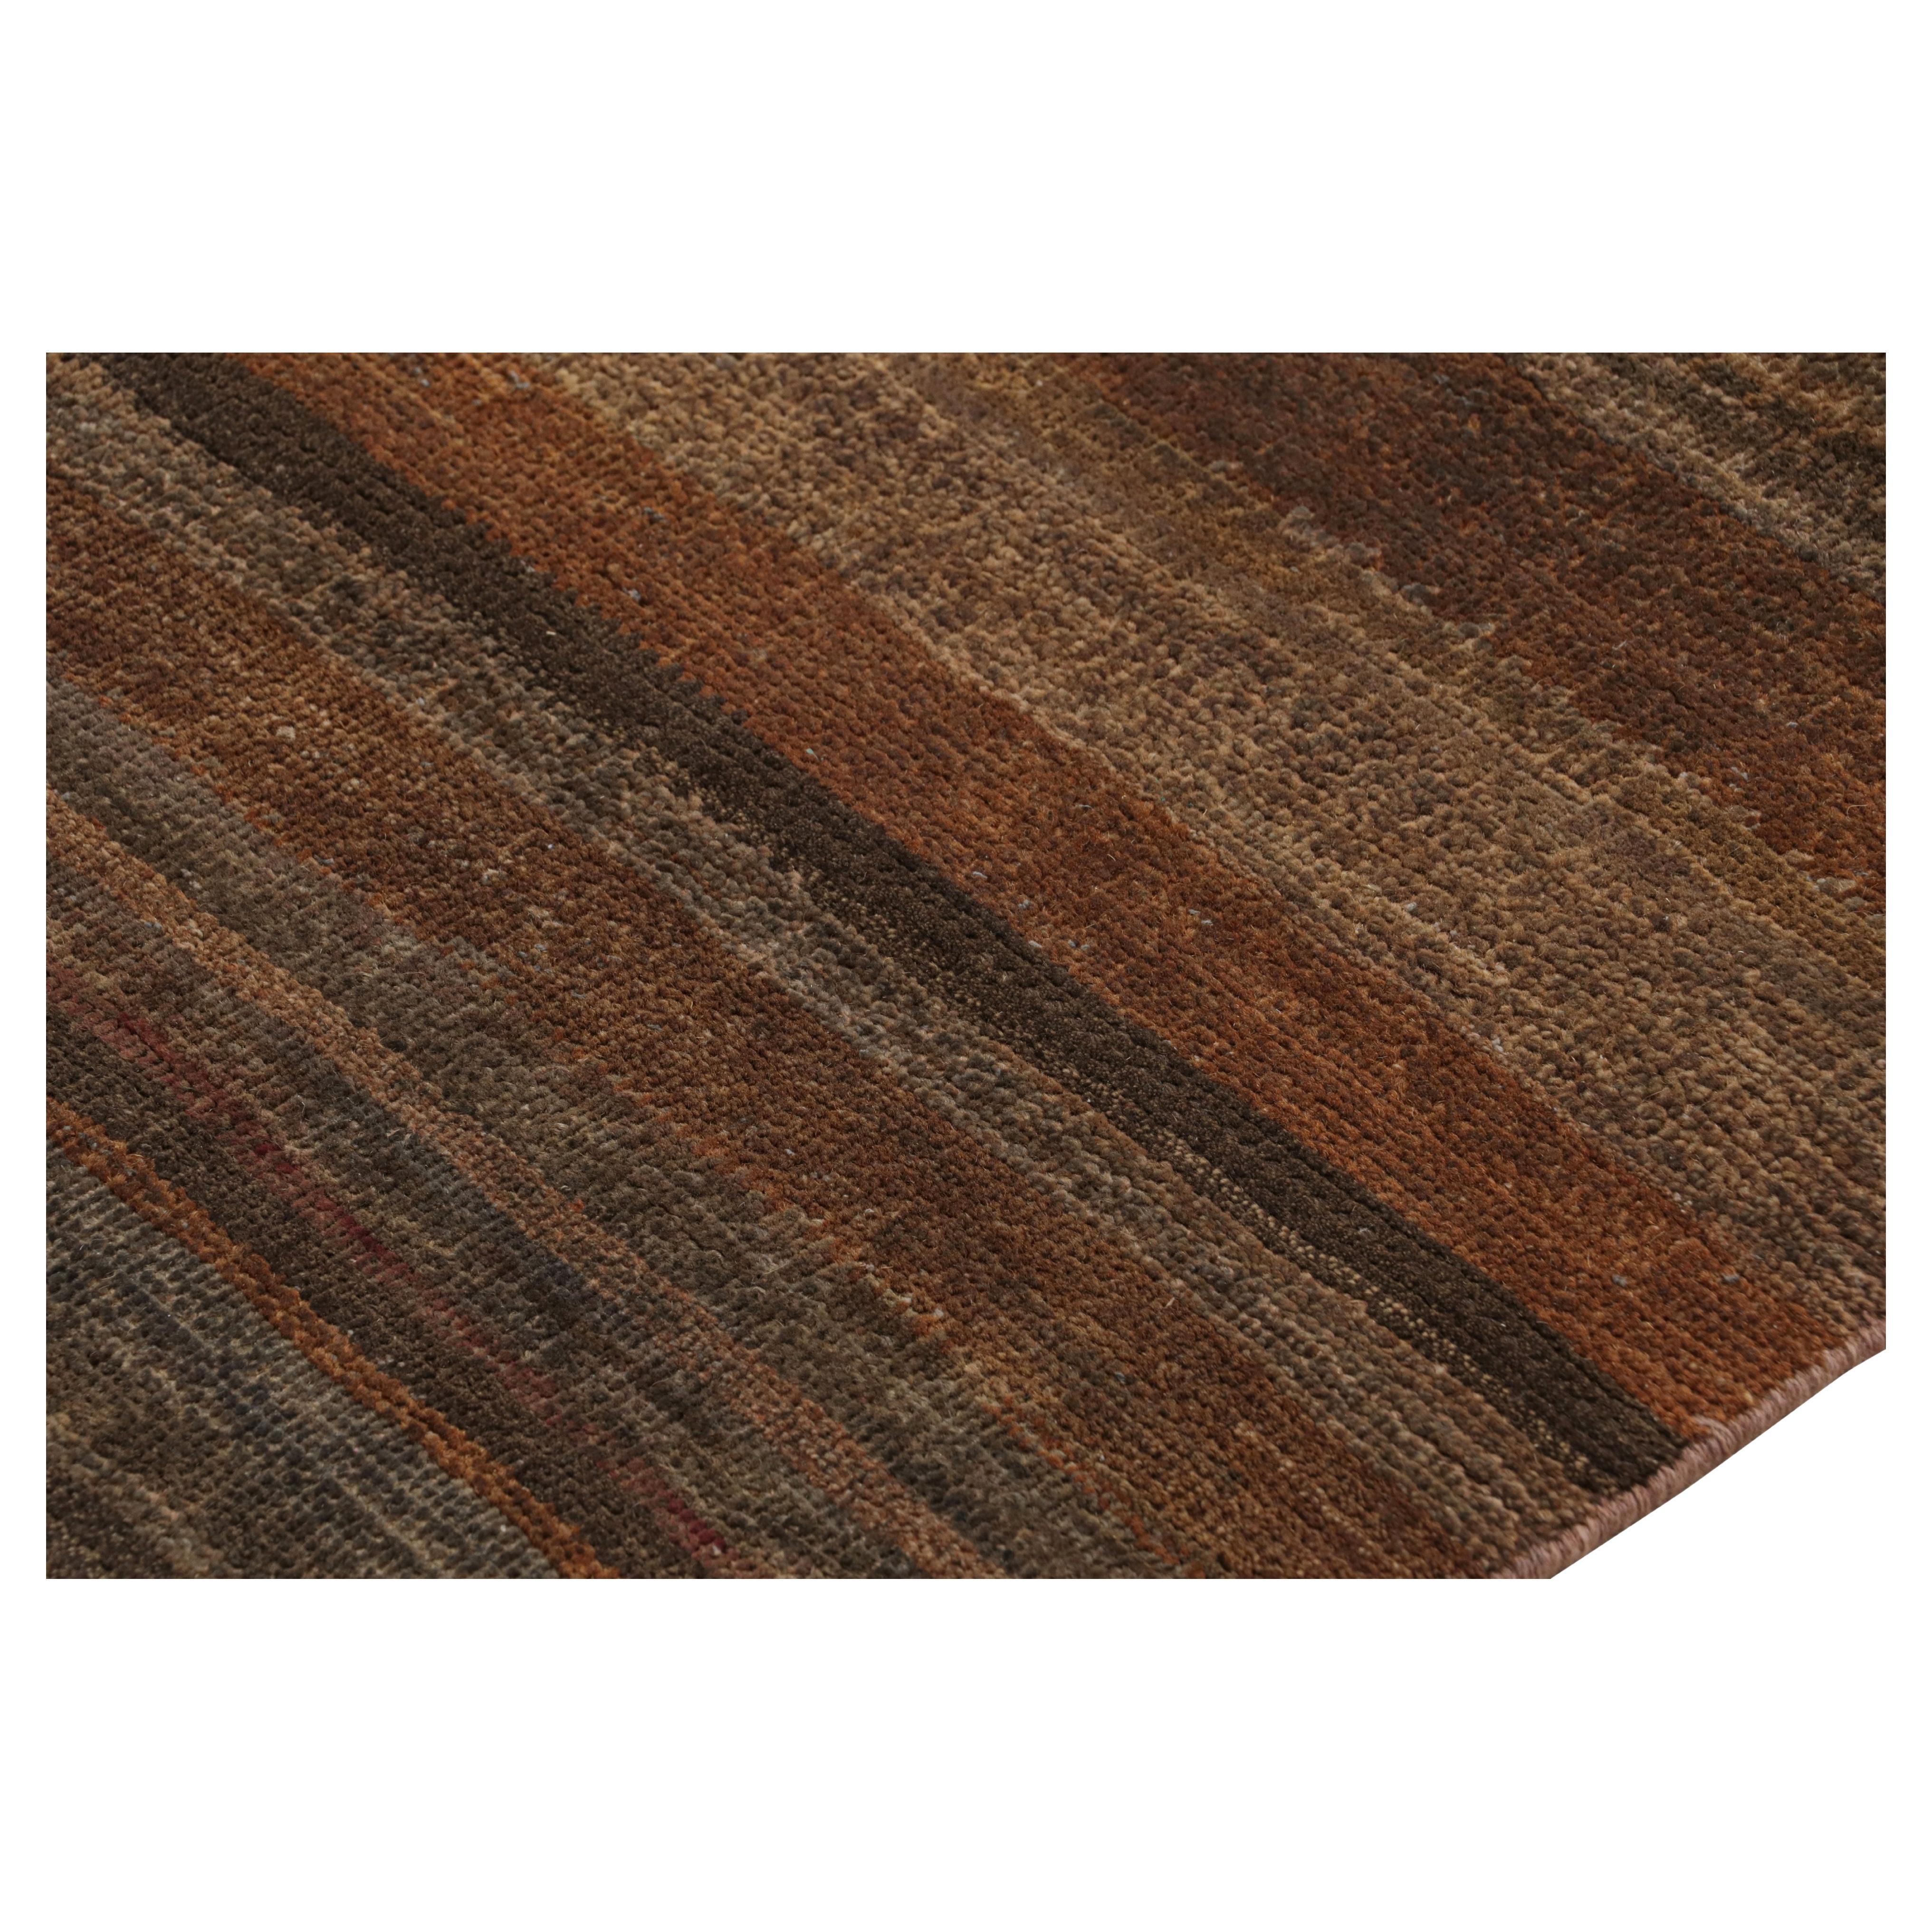 Rug & Kilim's Modern Textural Rug in Beige-Brown and Umber Stripes and Striae (Tapis à rayures beige, marron et orange) en vente